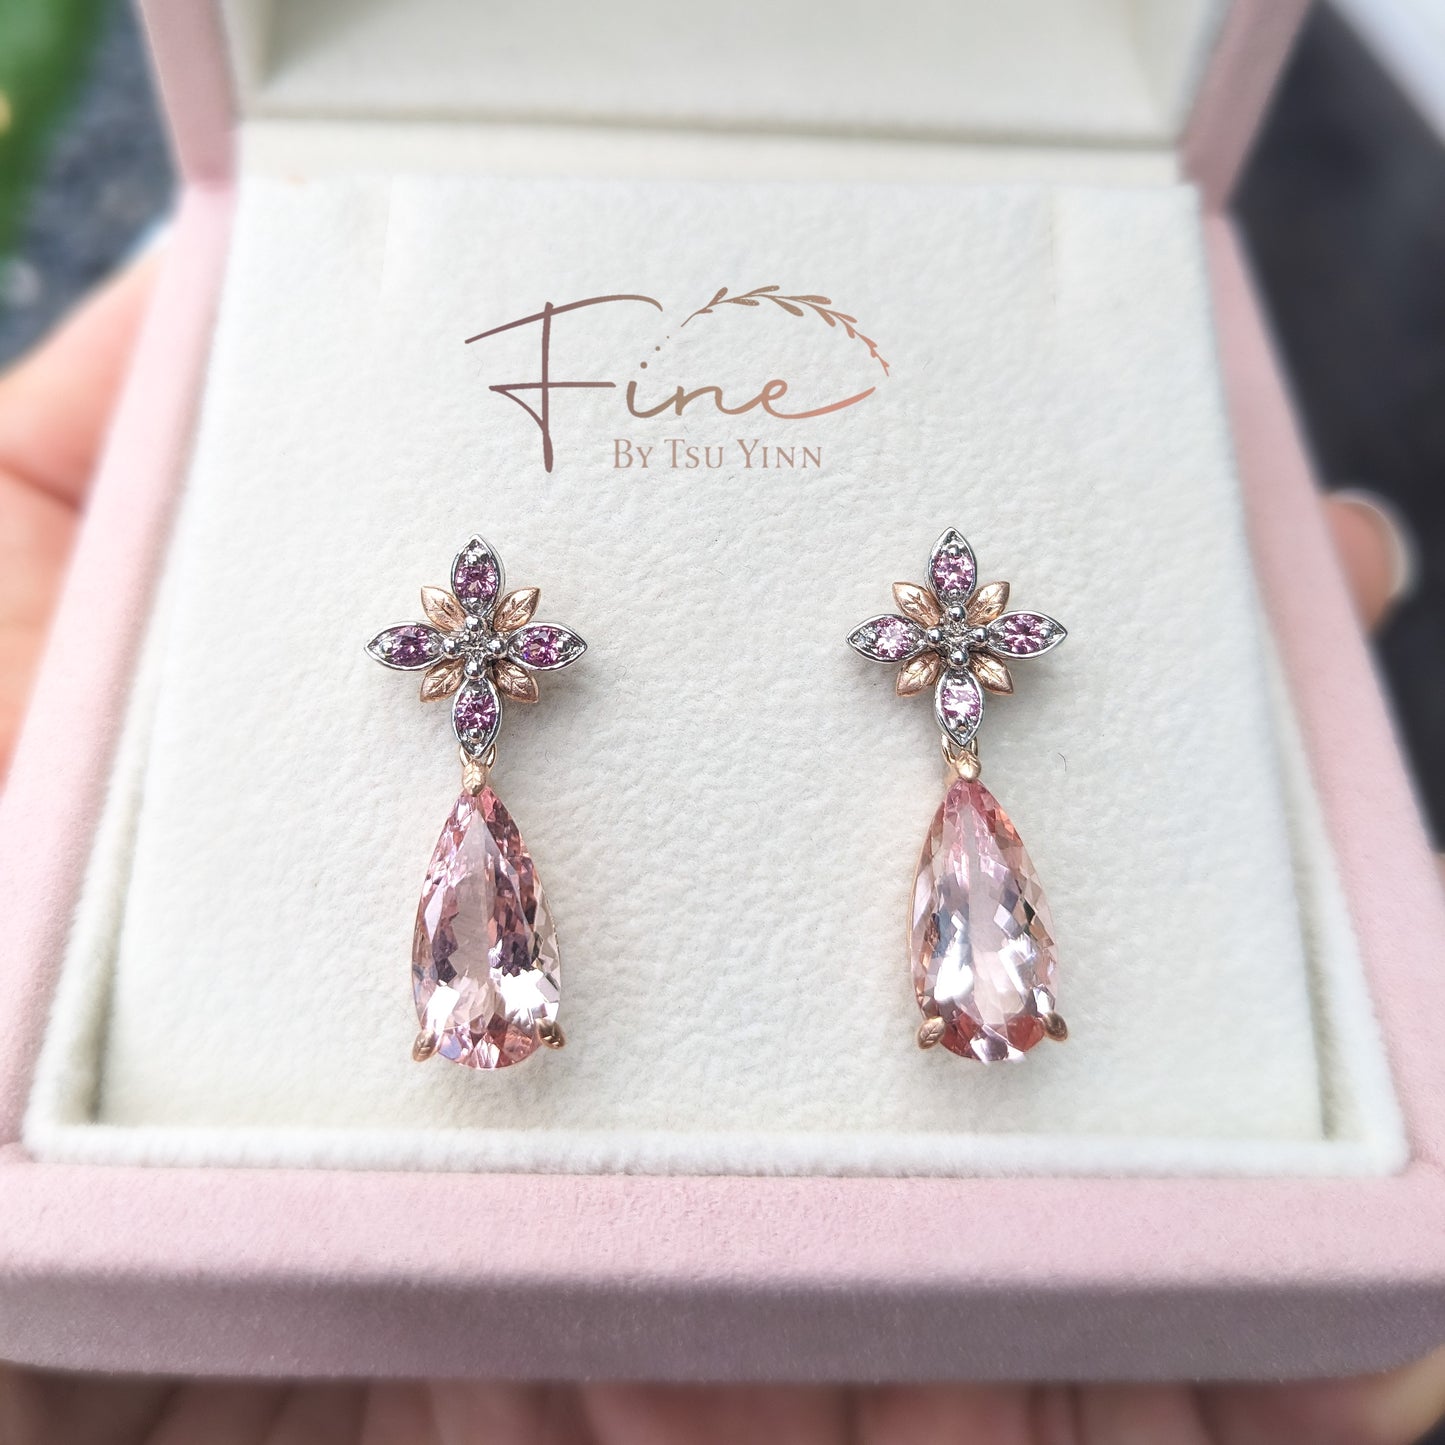 Flora Earrings with Morganite drops